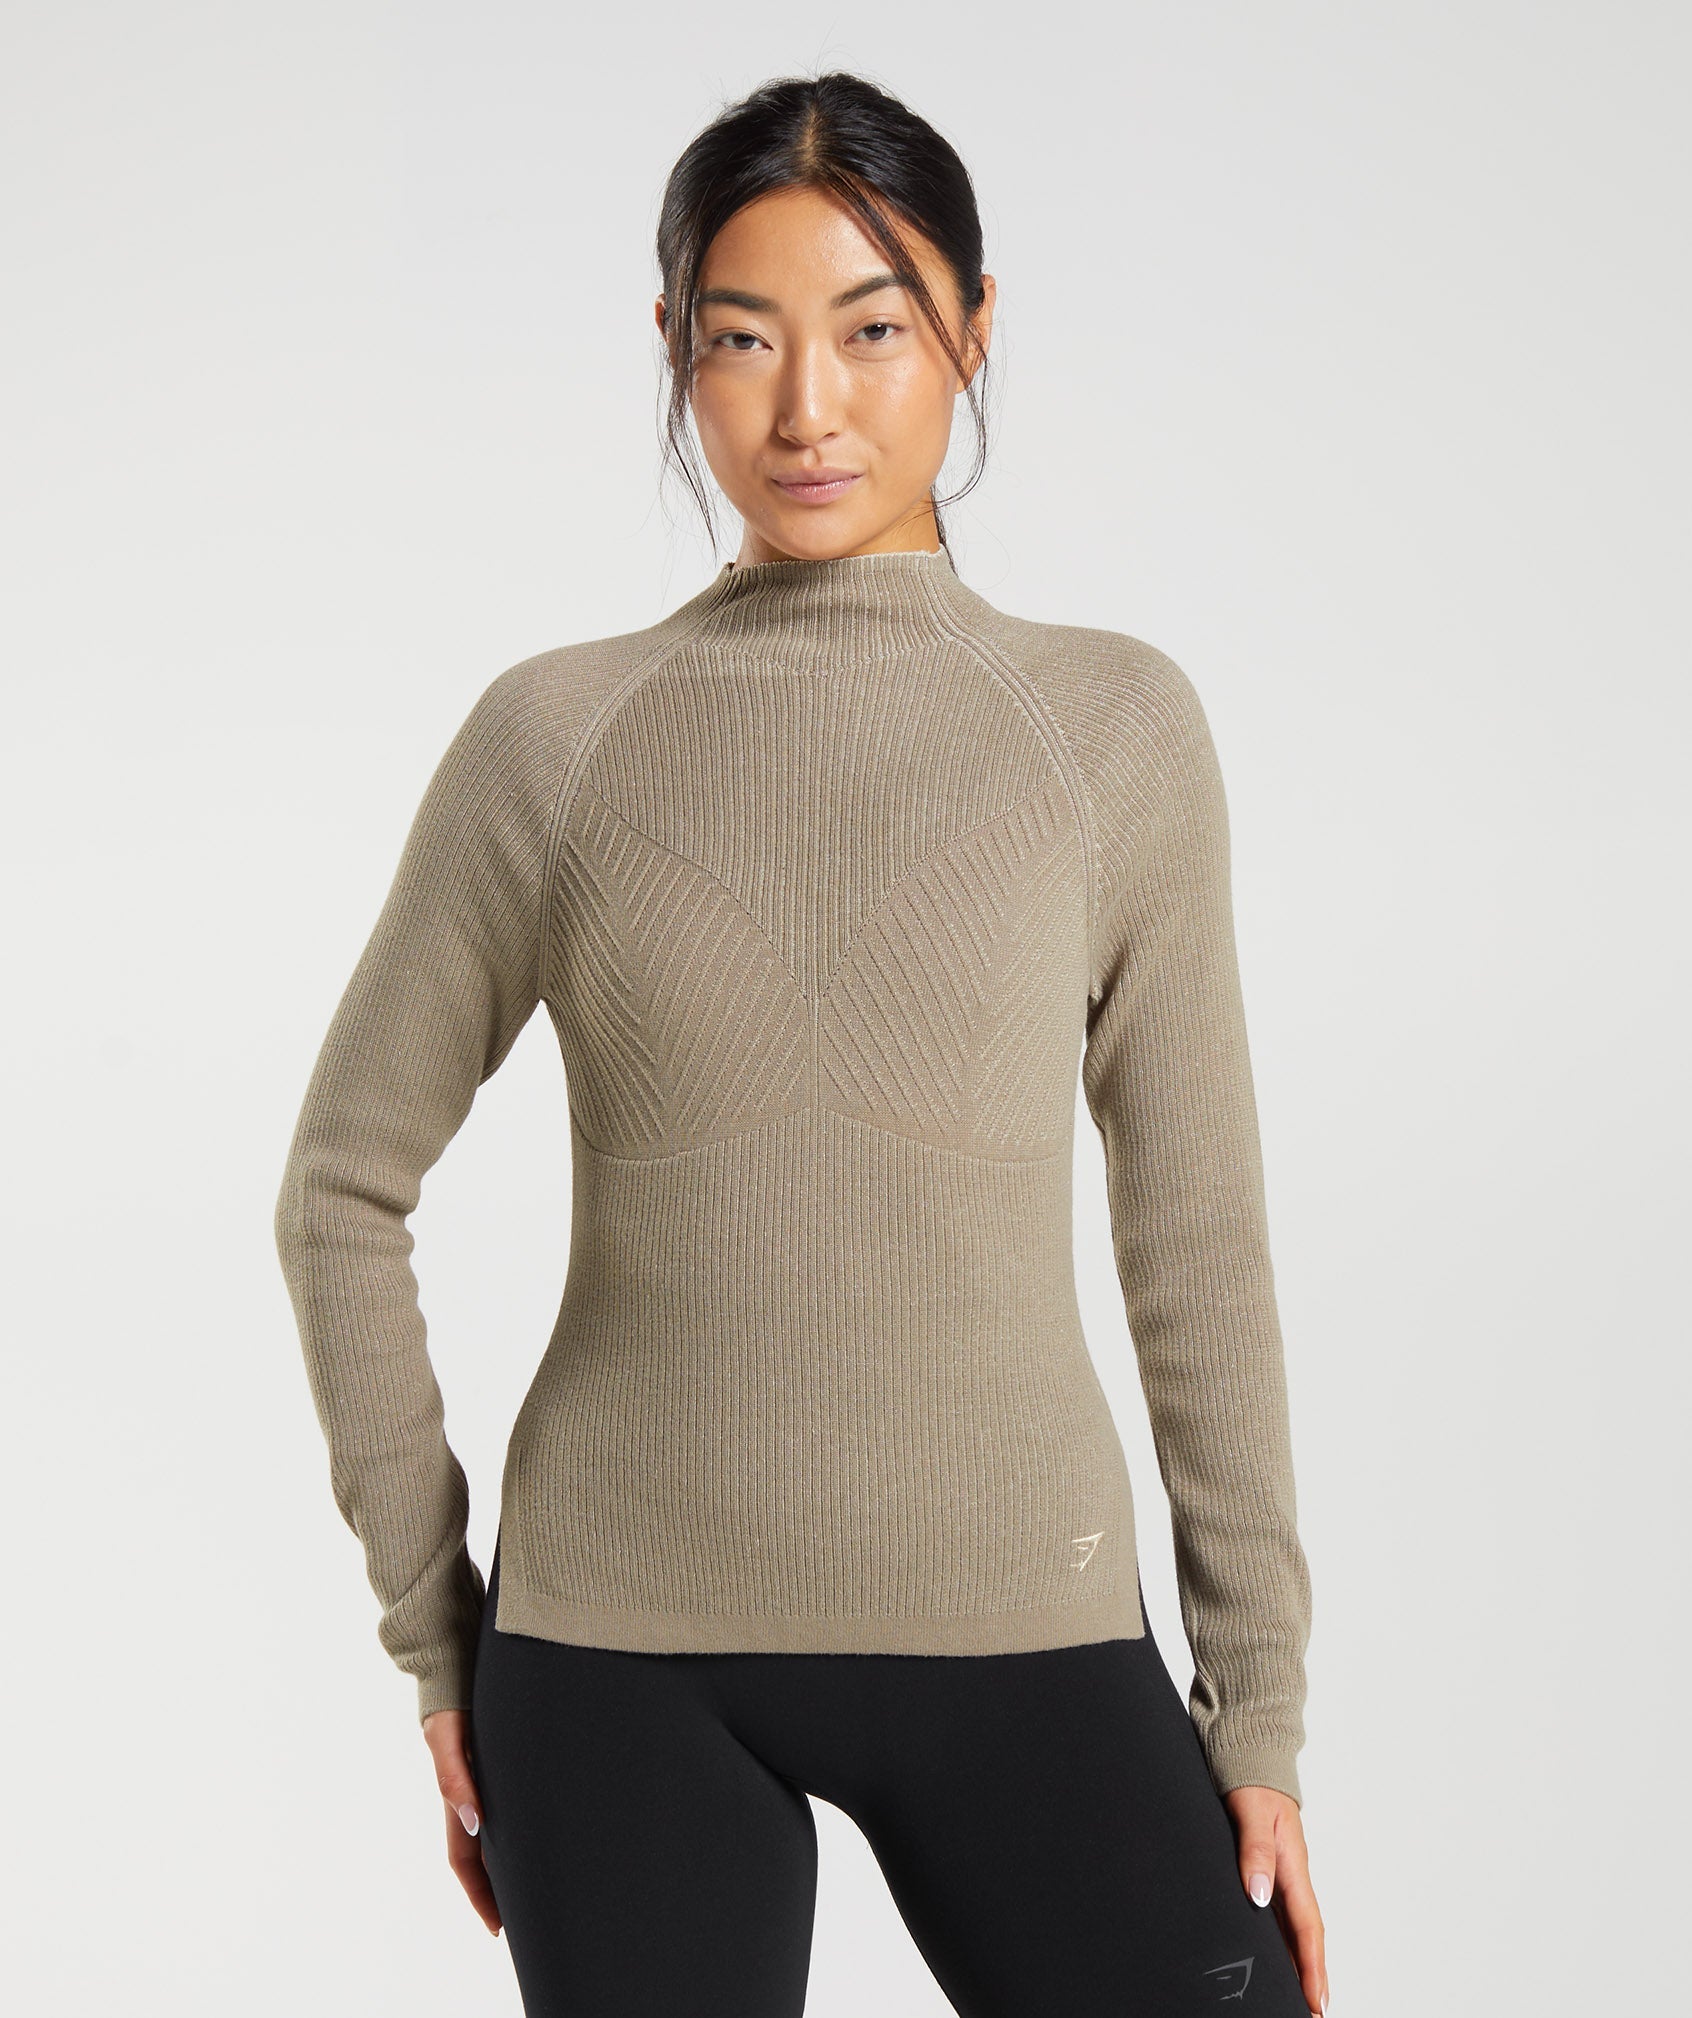 Pause Knitwear Long Sleeve Top in Cement Brown/Pebble Grey